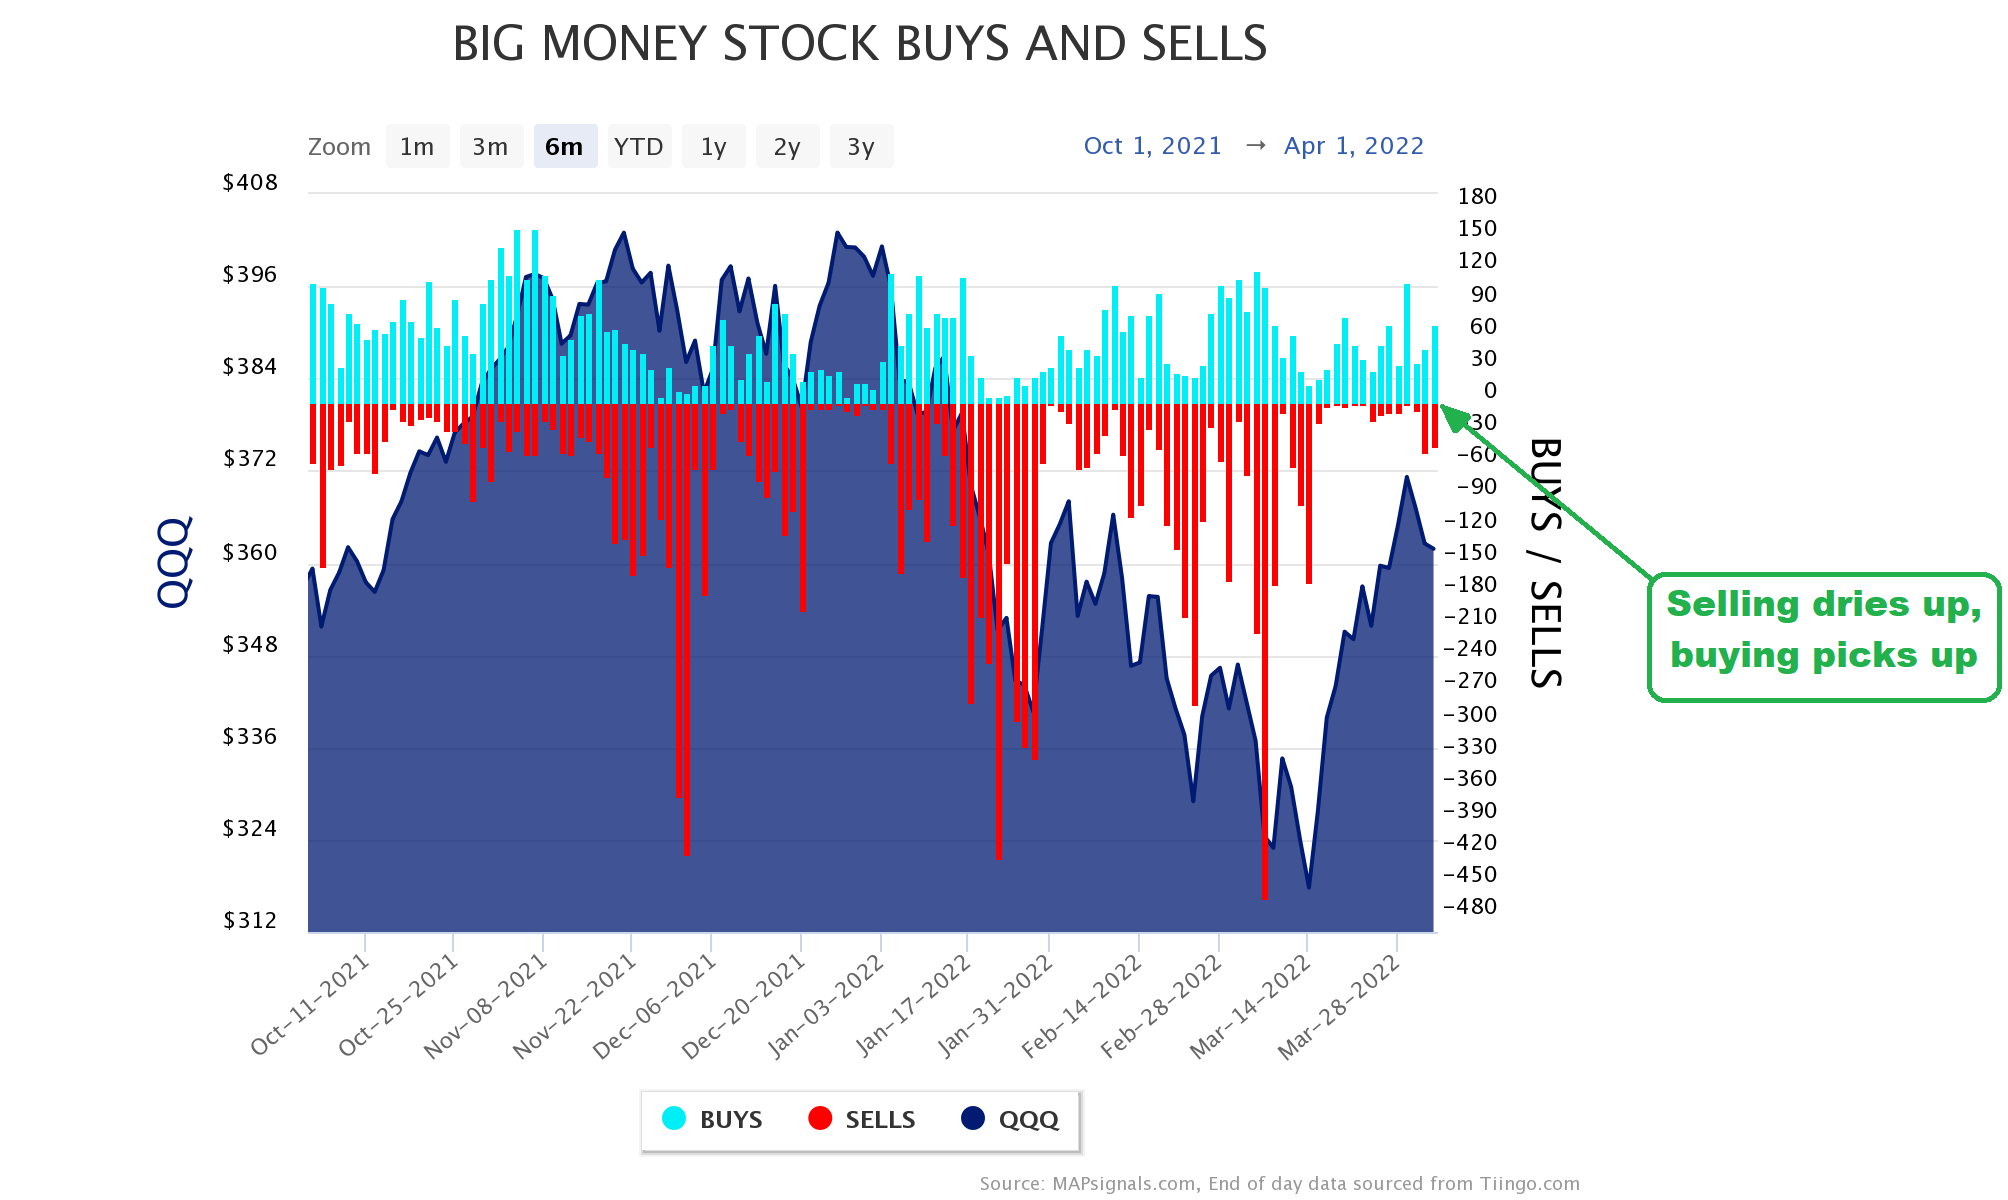 Big Money stock buys and sells QQQ